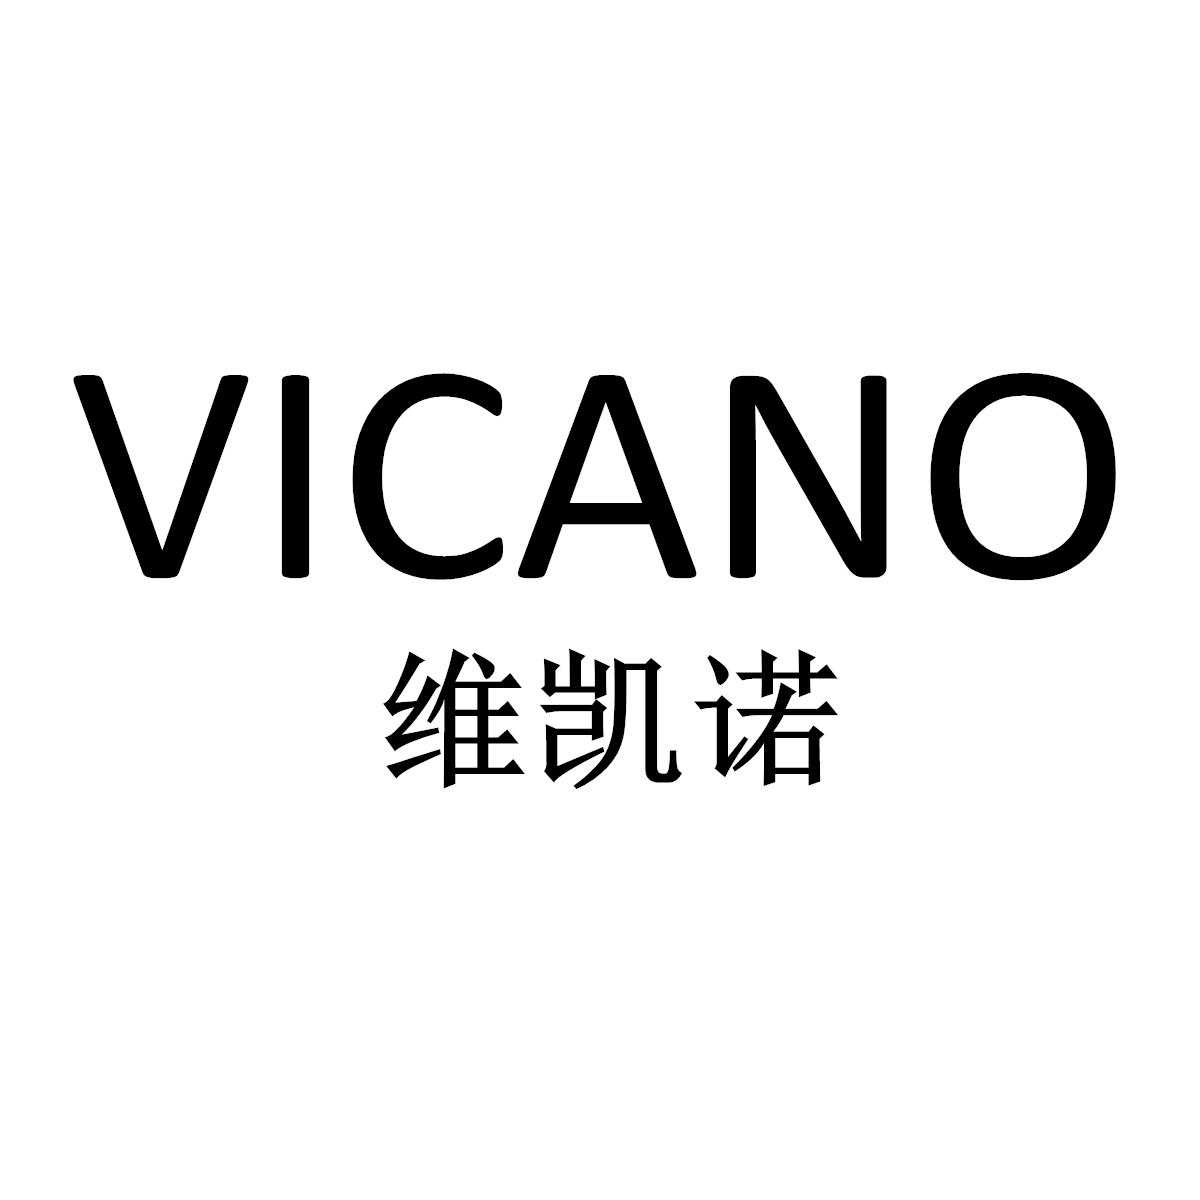 维凯诺 vicano 商标公告